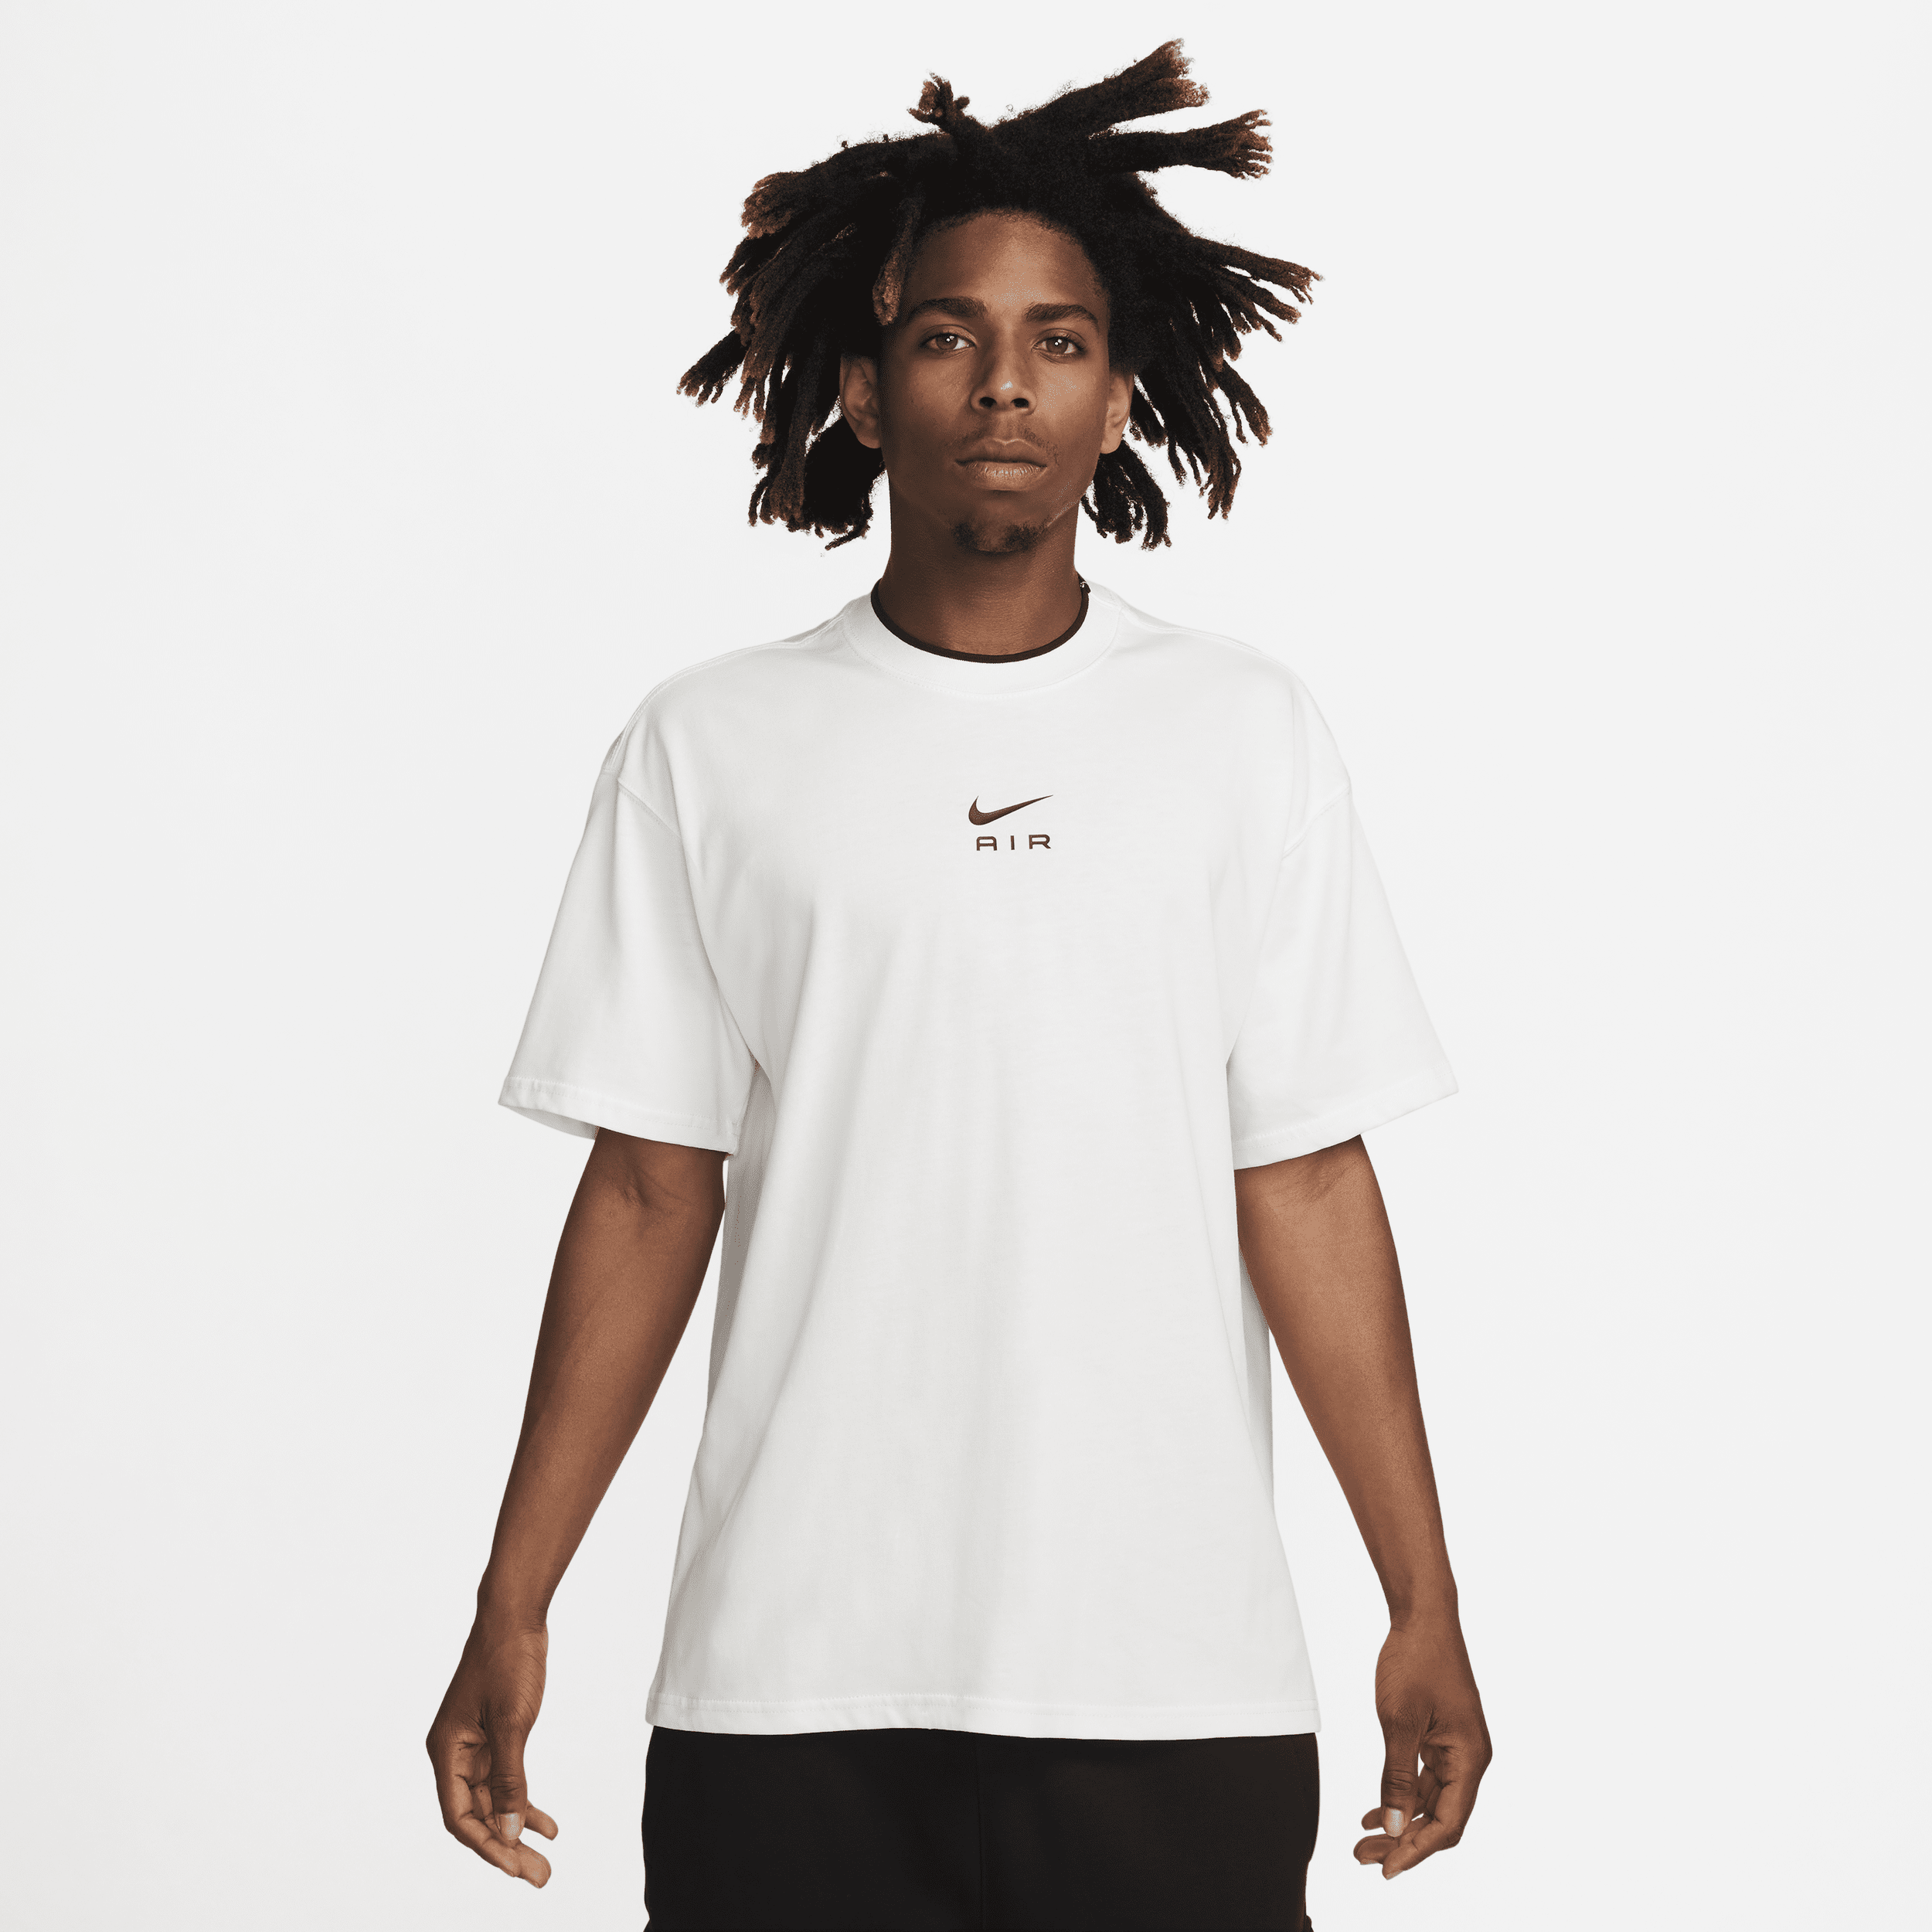 Nike Air Camiseta - Hombre - Blanco